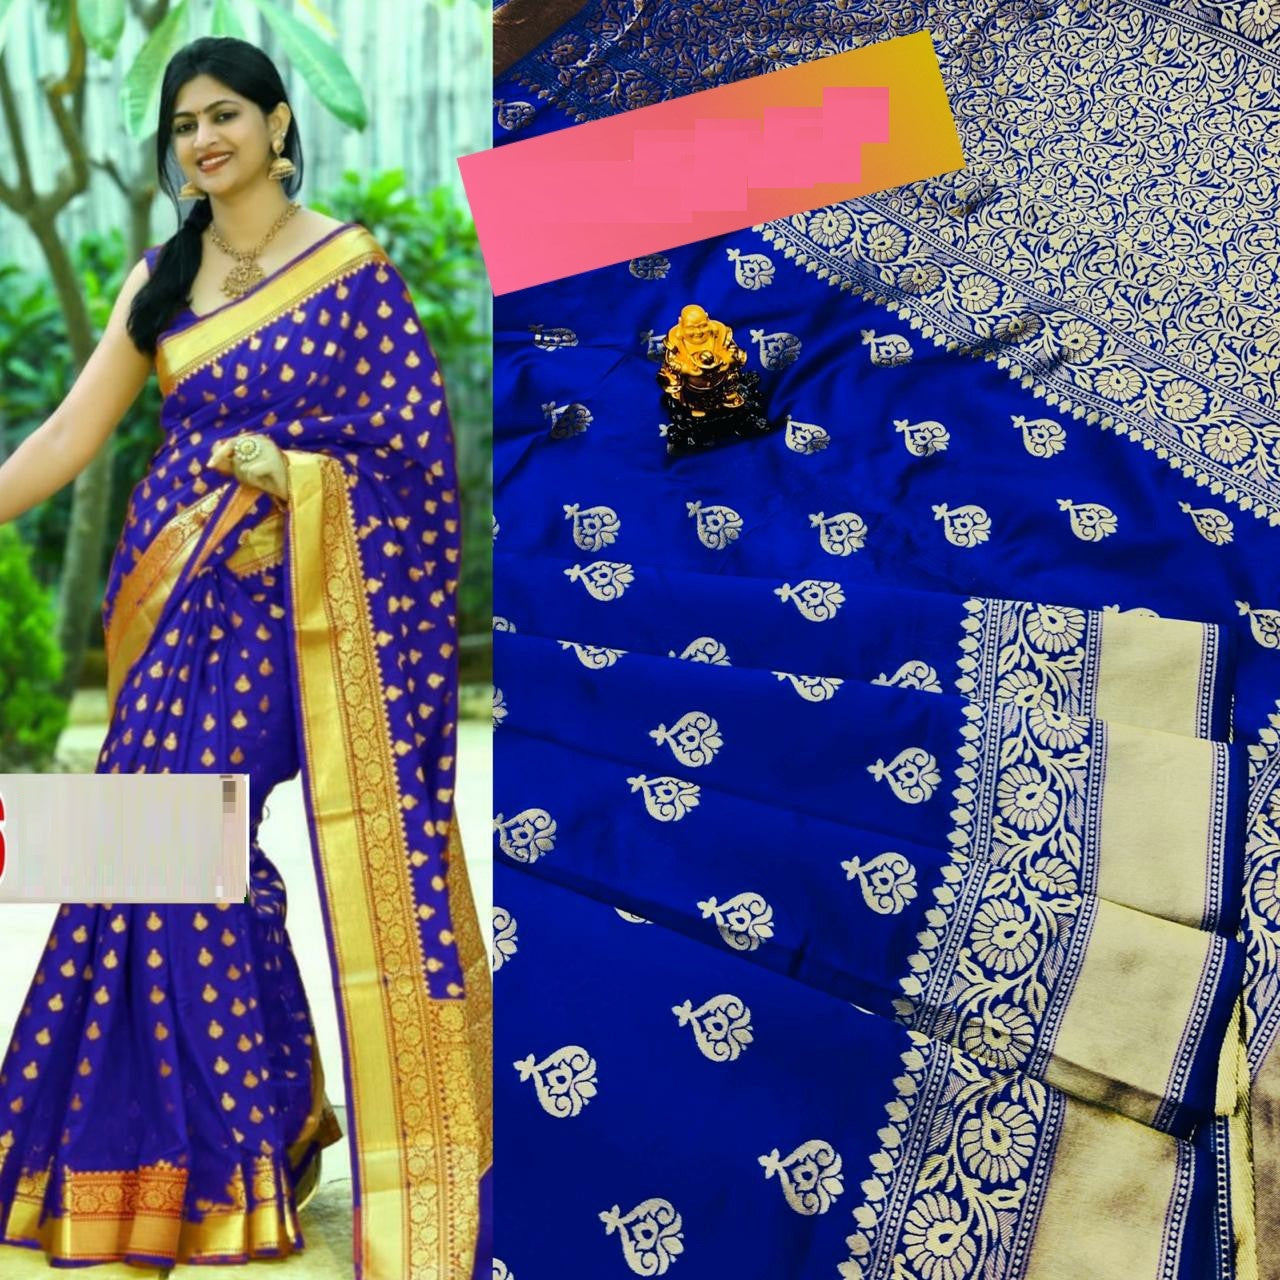 Blue & Yellow Colored Party Wear Ladise Banarasi Silk Saree With Reach Pallu Border